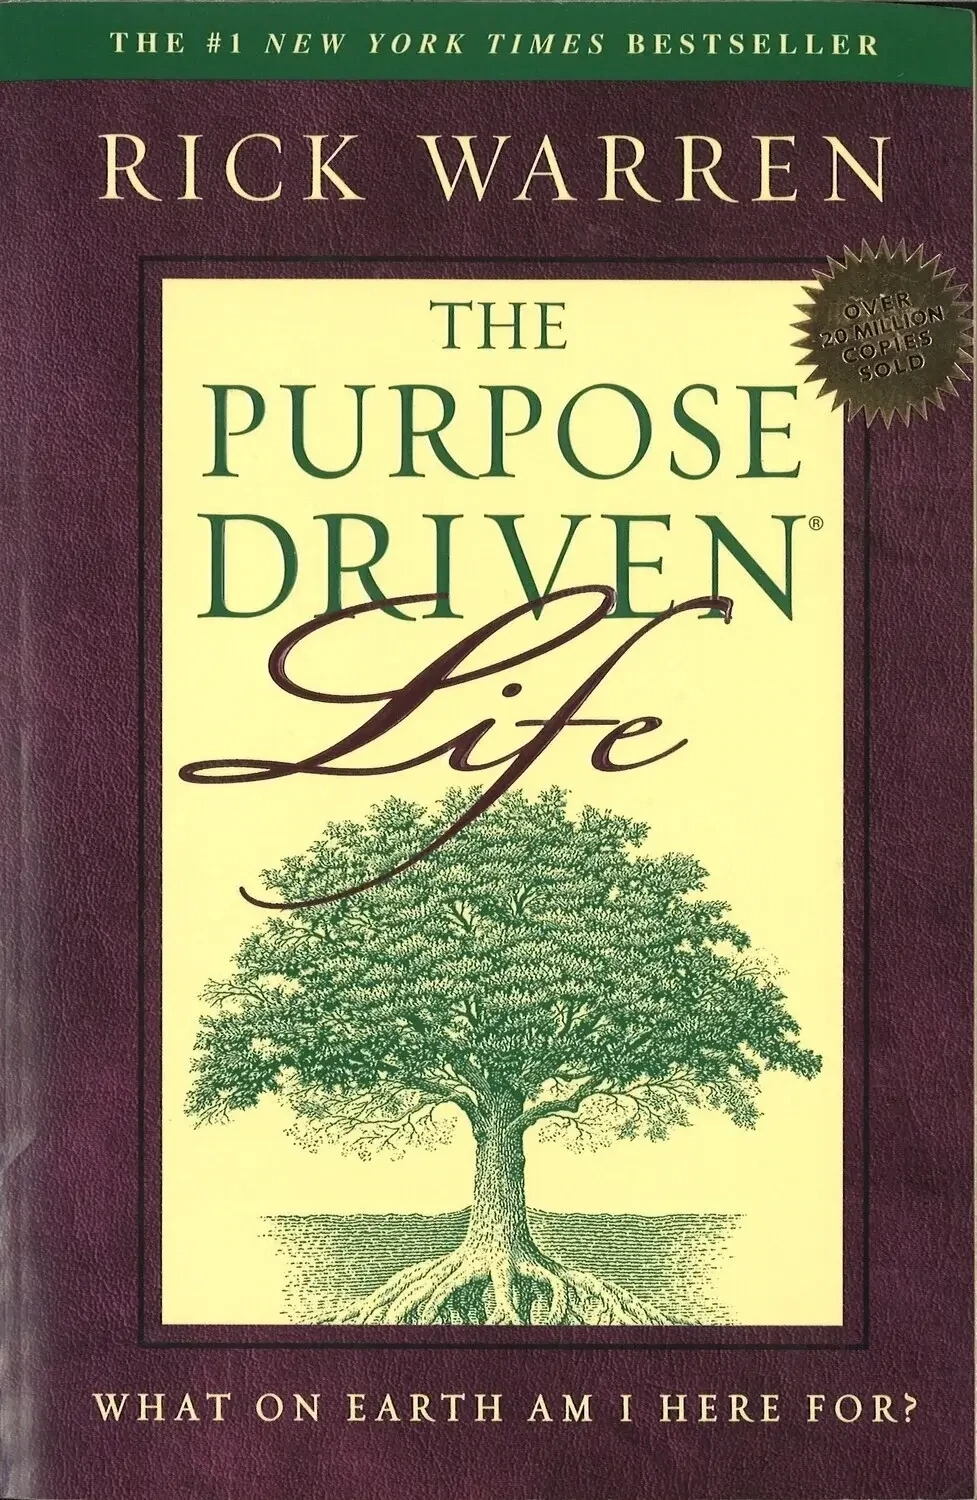 The Purpose Driven Live by Rick Warren